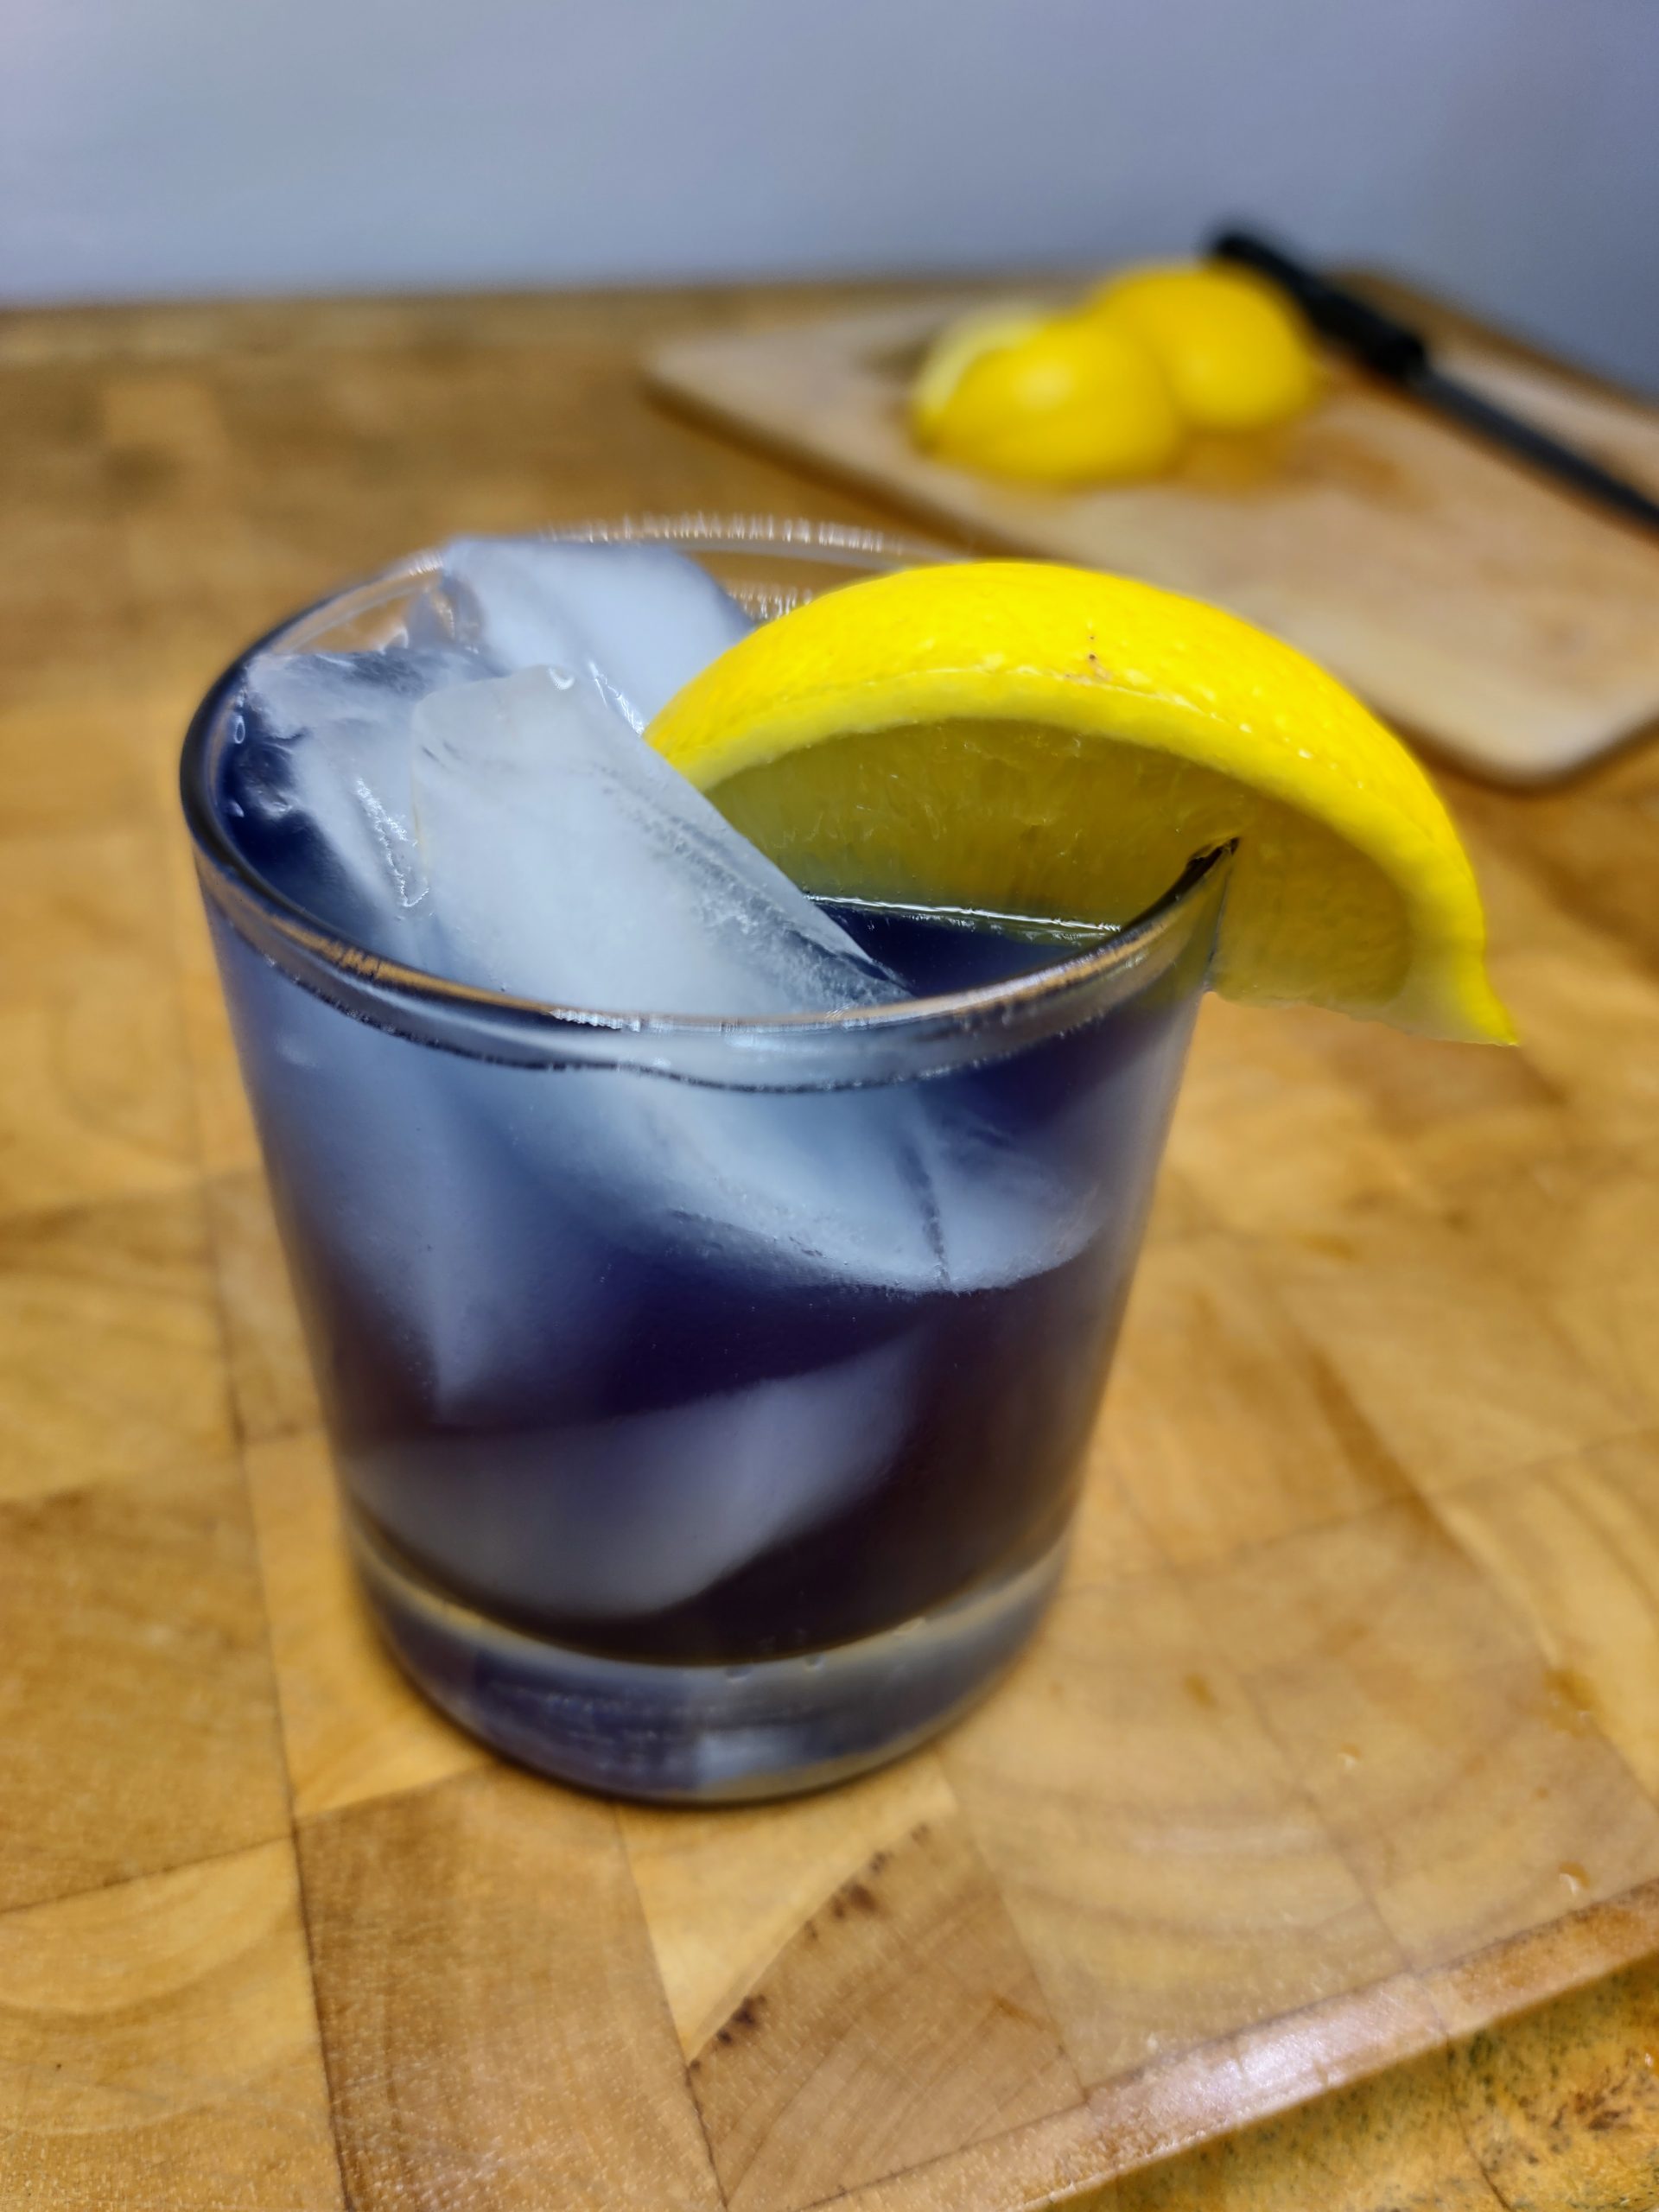 purple rain drink with lemon wedge in background